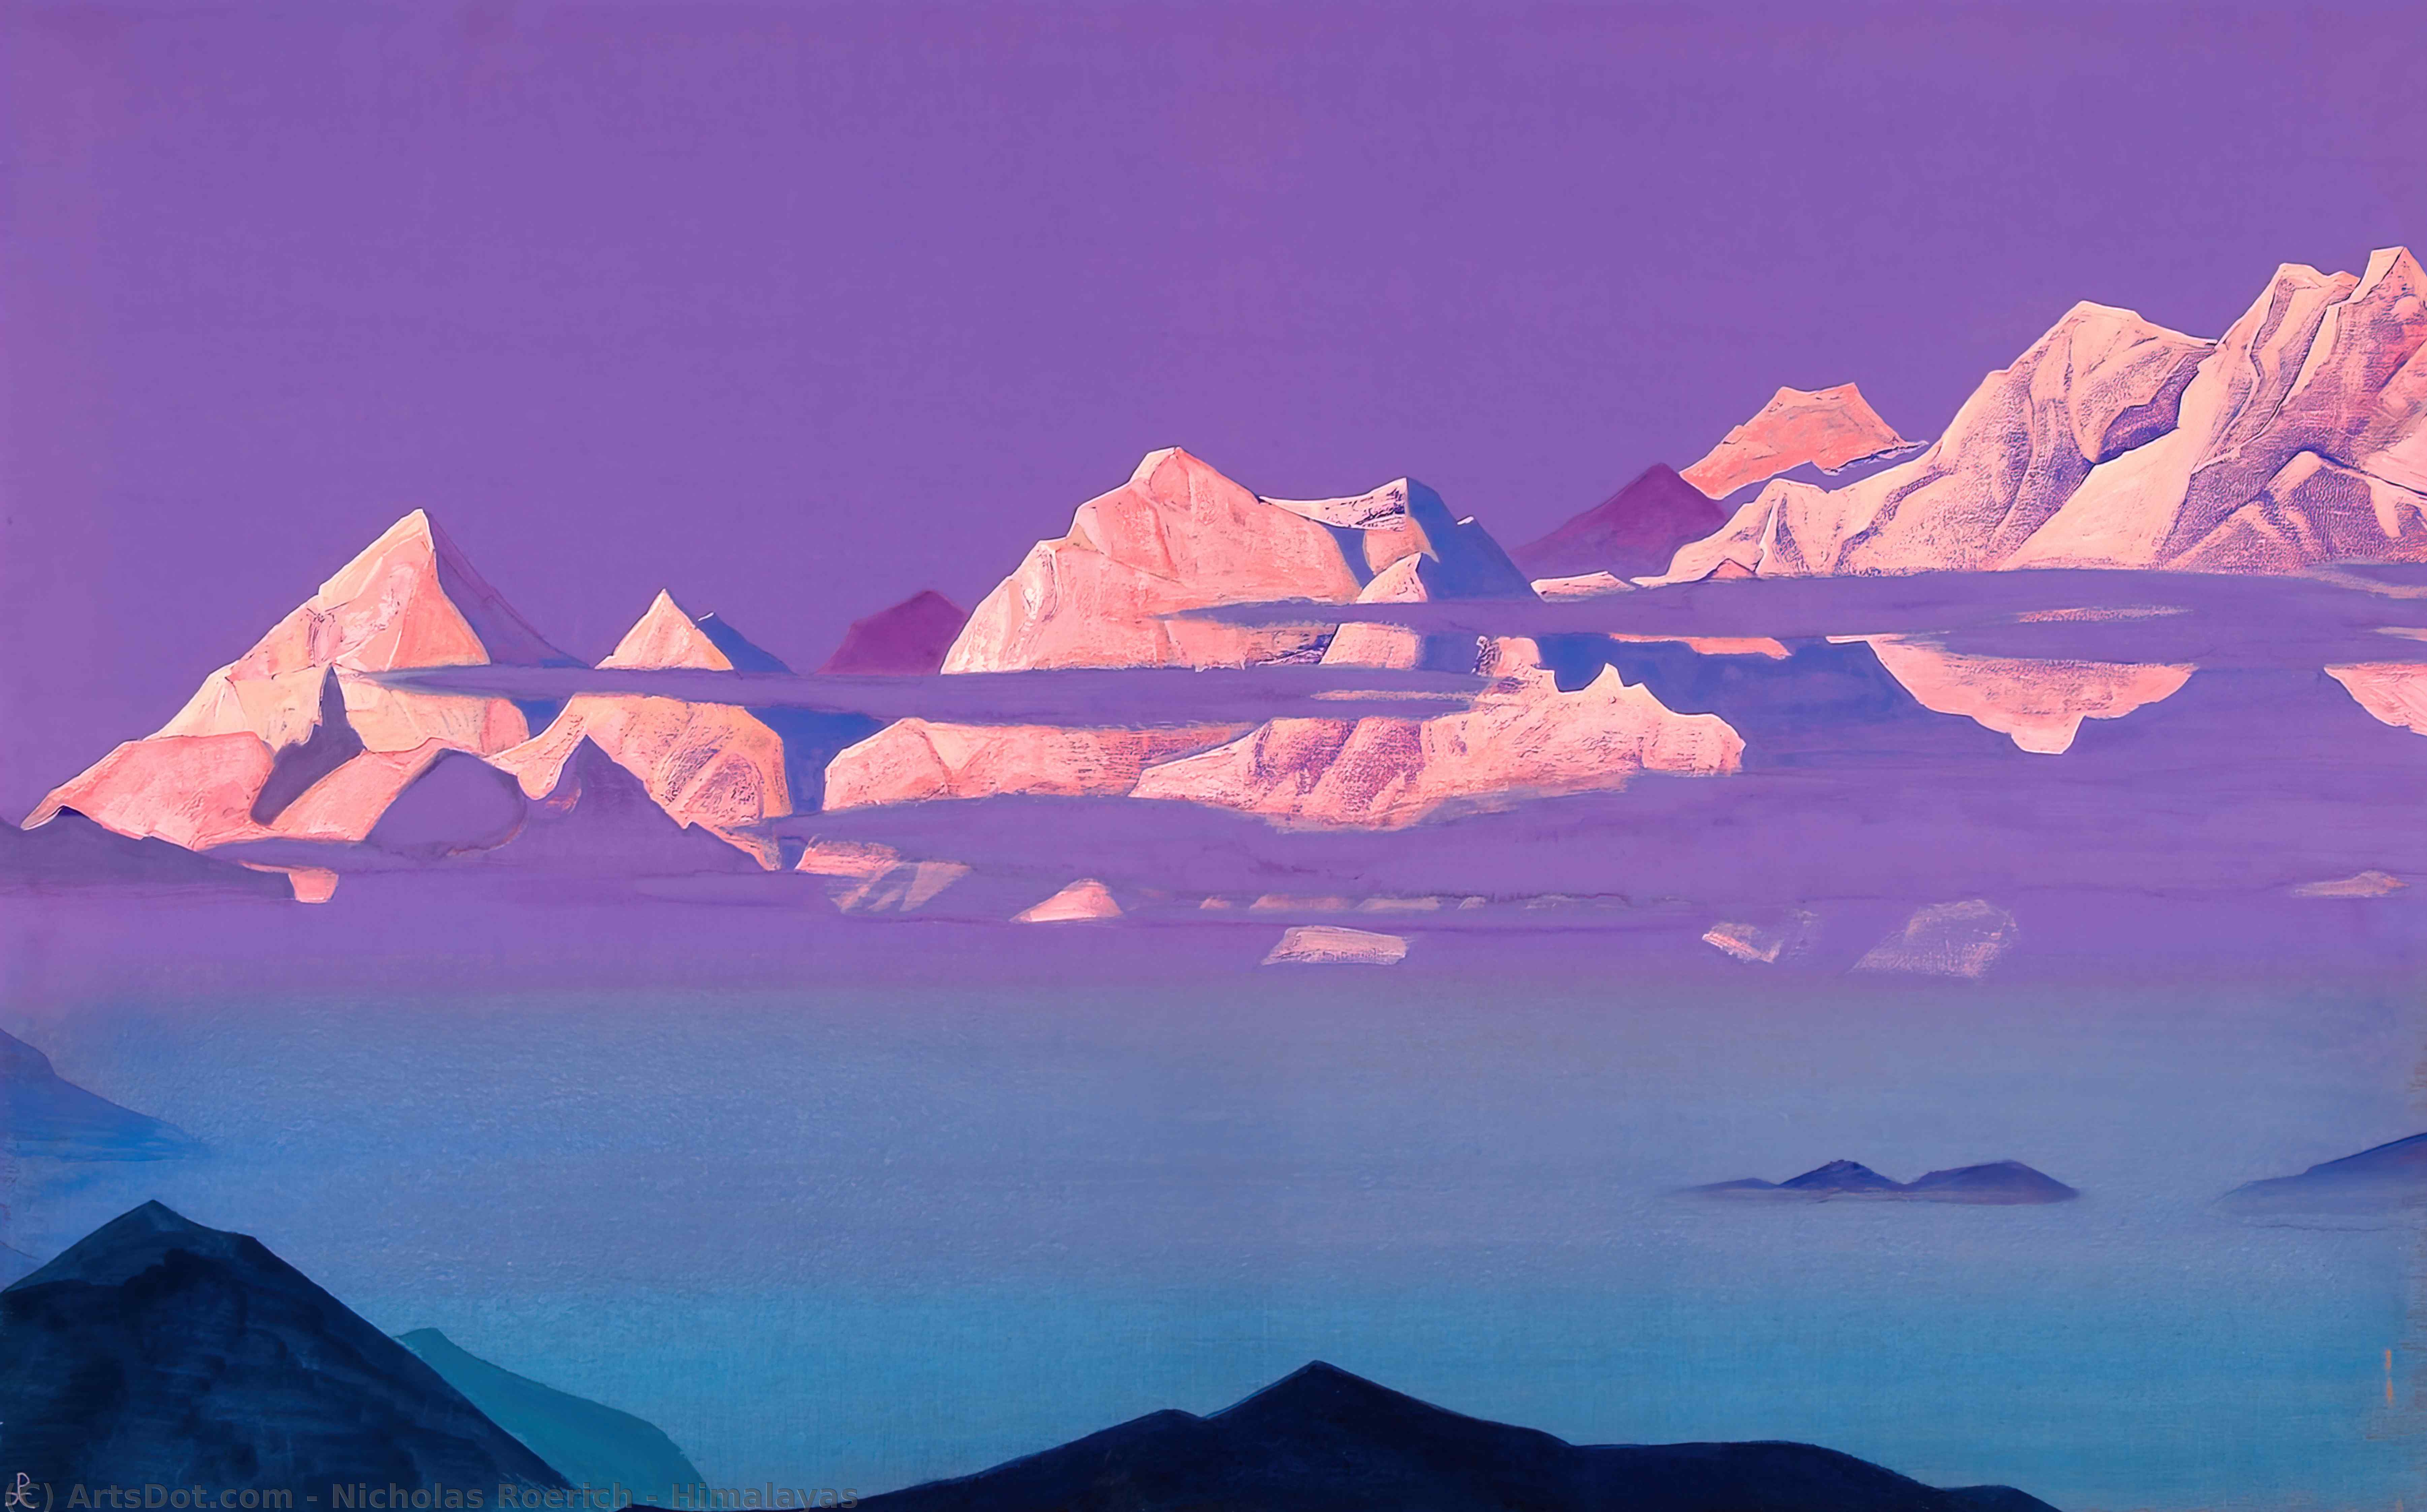  Artwork Replica Himalayas by Nicholas Roerich (1874-1947, Russia) | ArtsDot.com